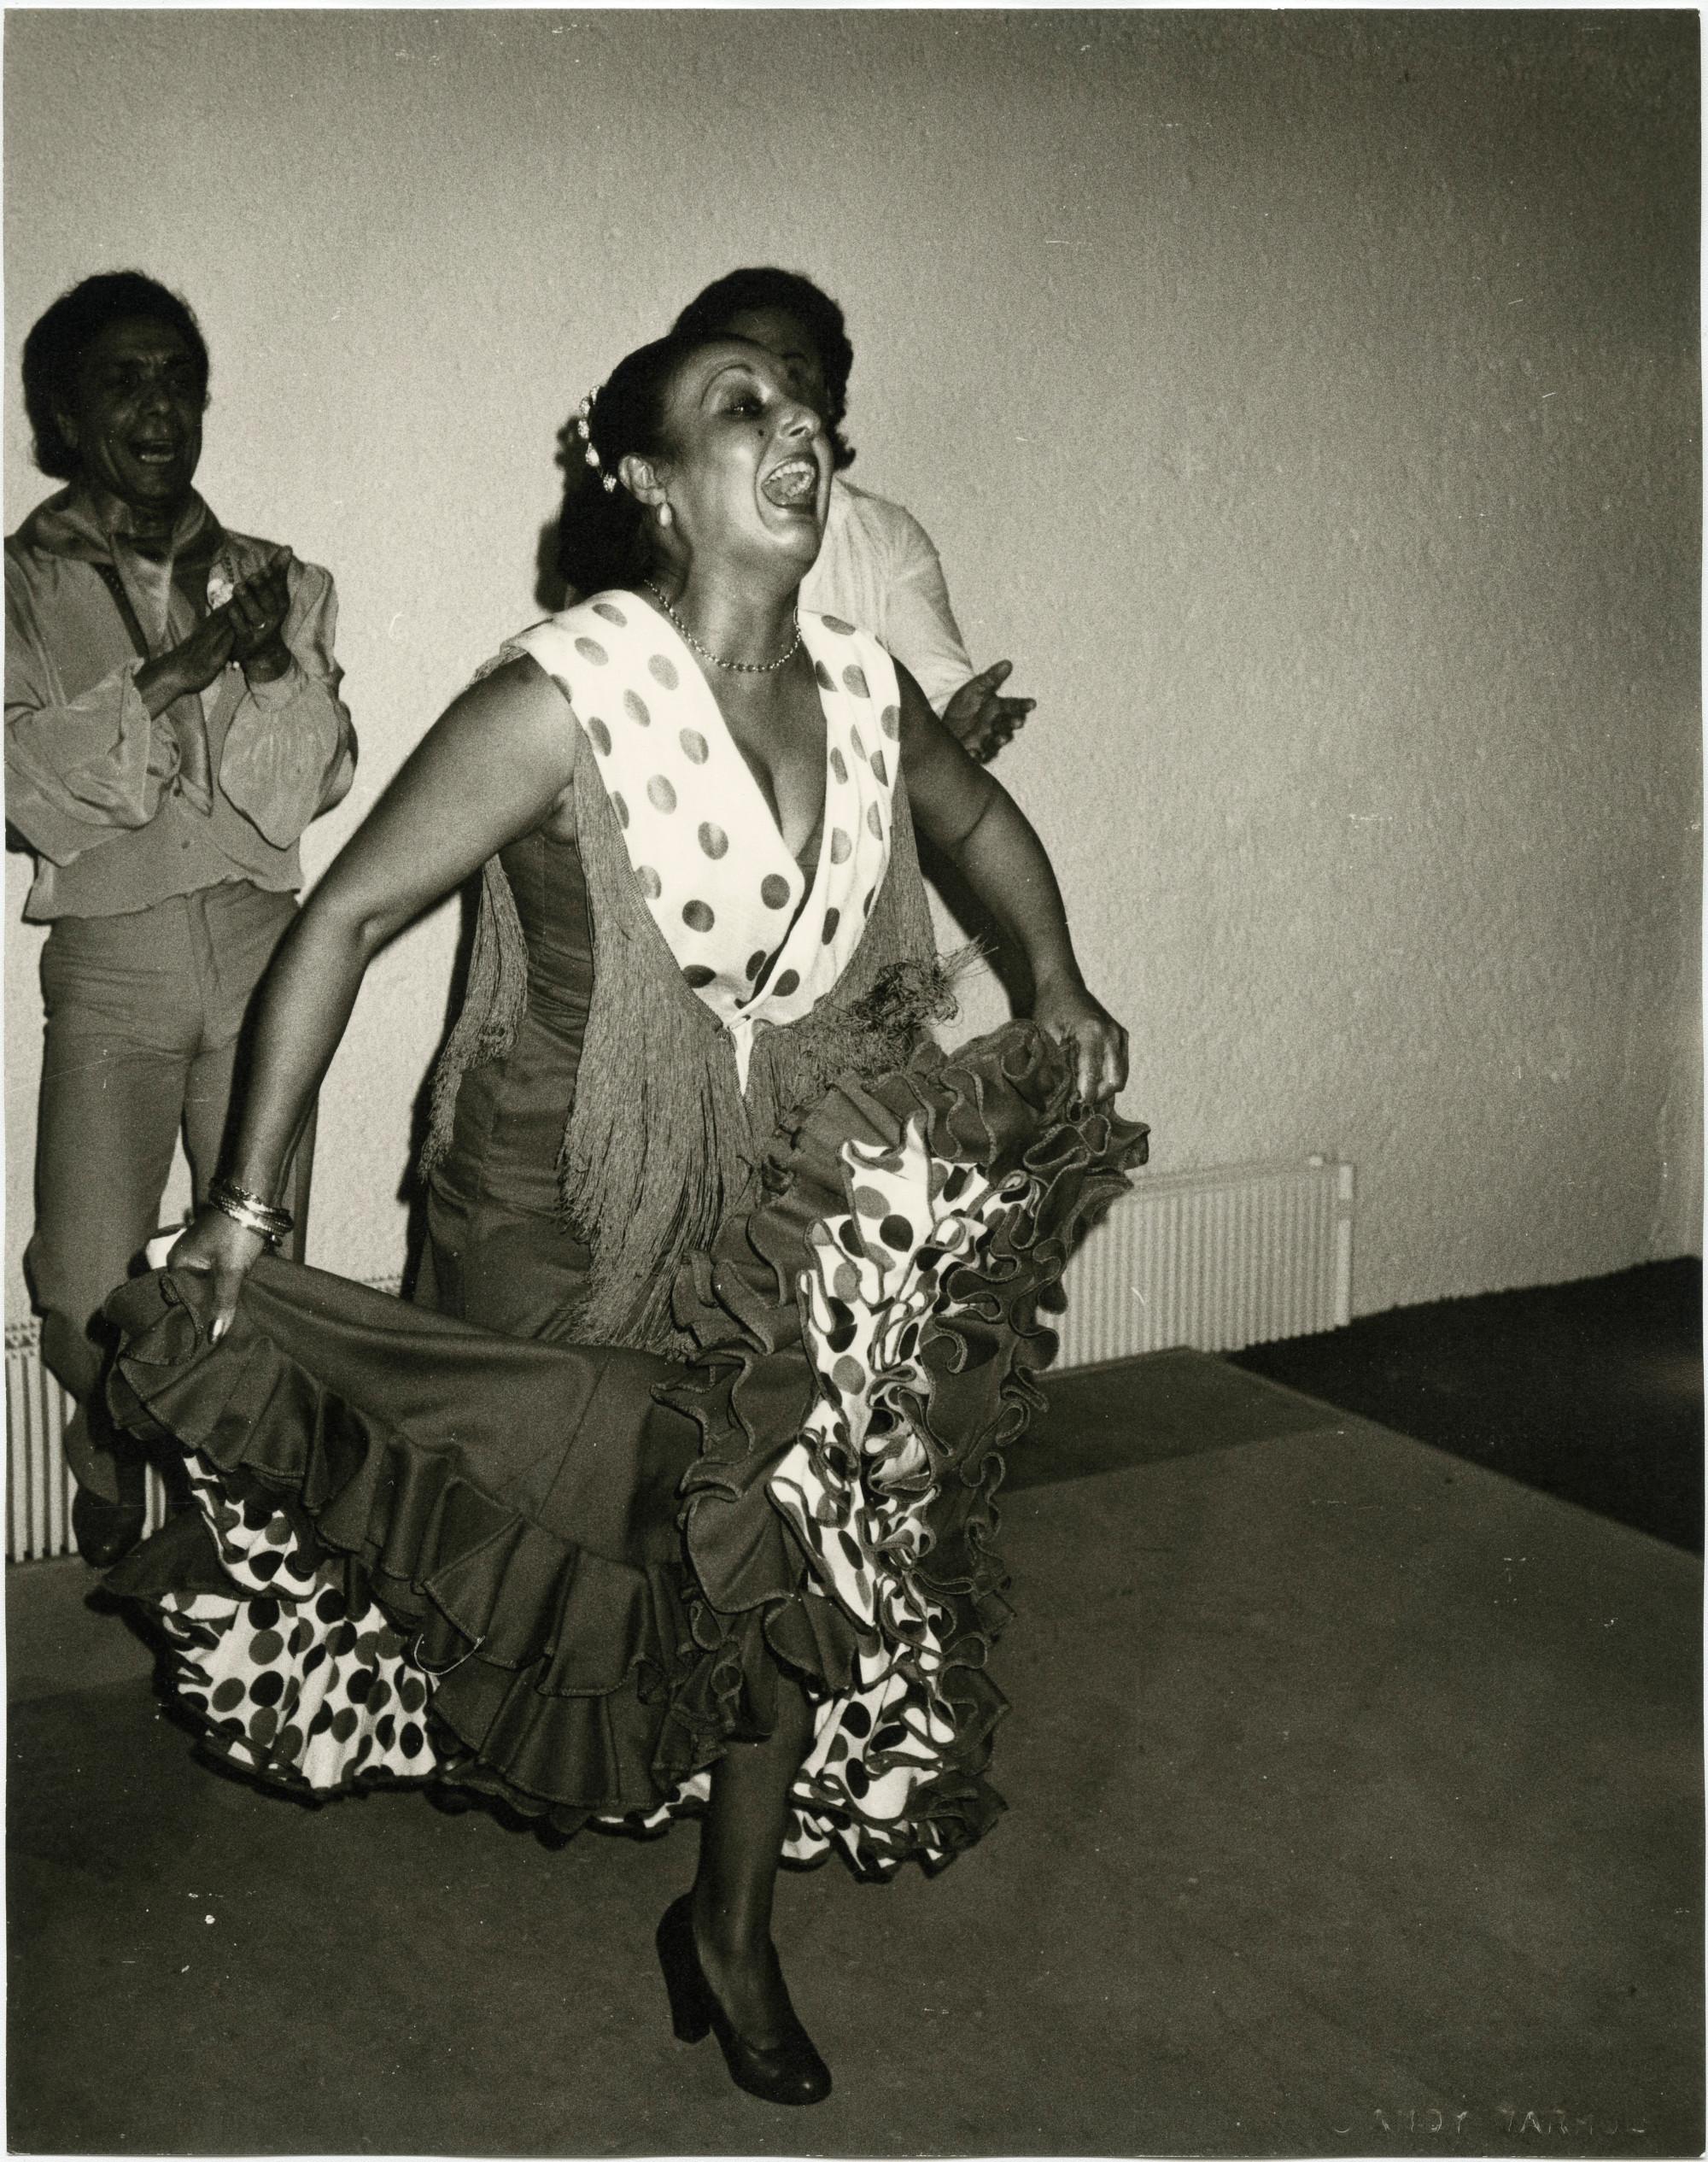 Andy Warhol Portrait Photograph - Flamenco Dancers in Spain